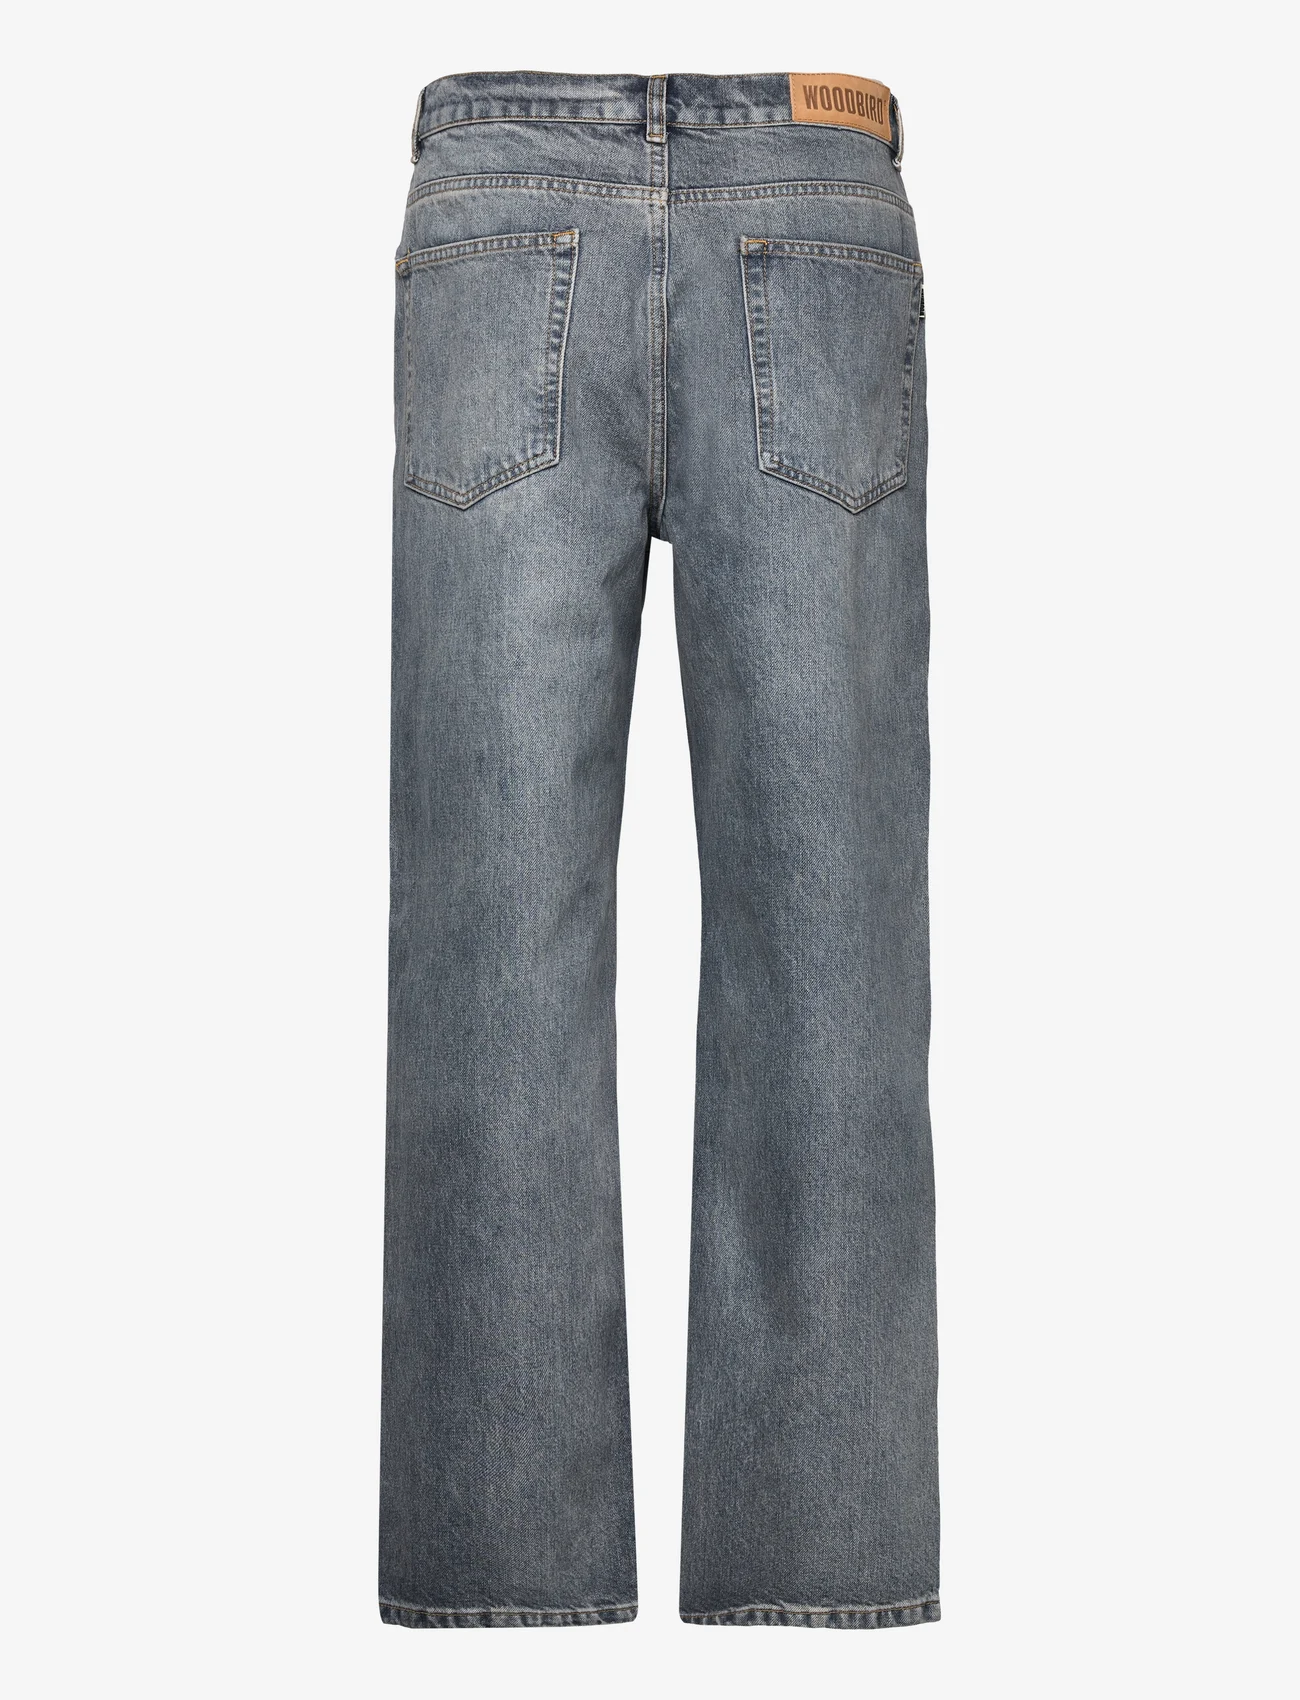 Woodbird - WBRami Bone Jeans - nordic style - grey blue - 1